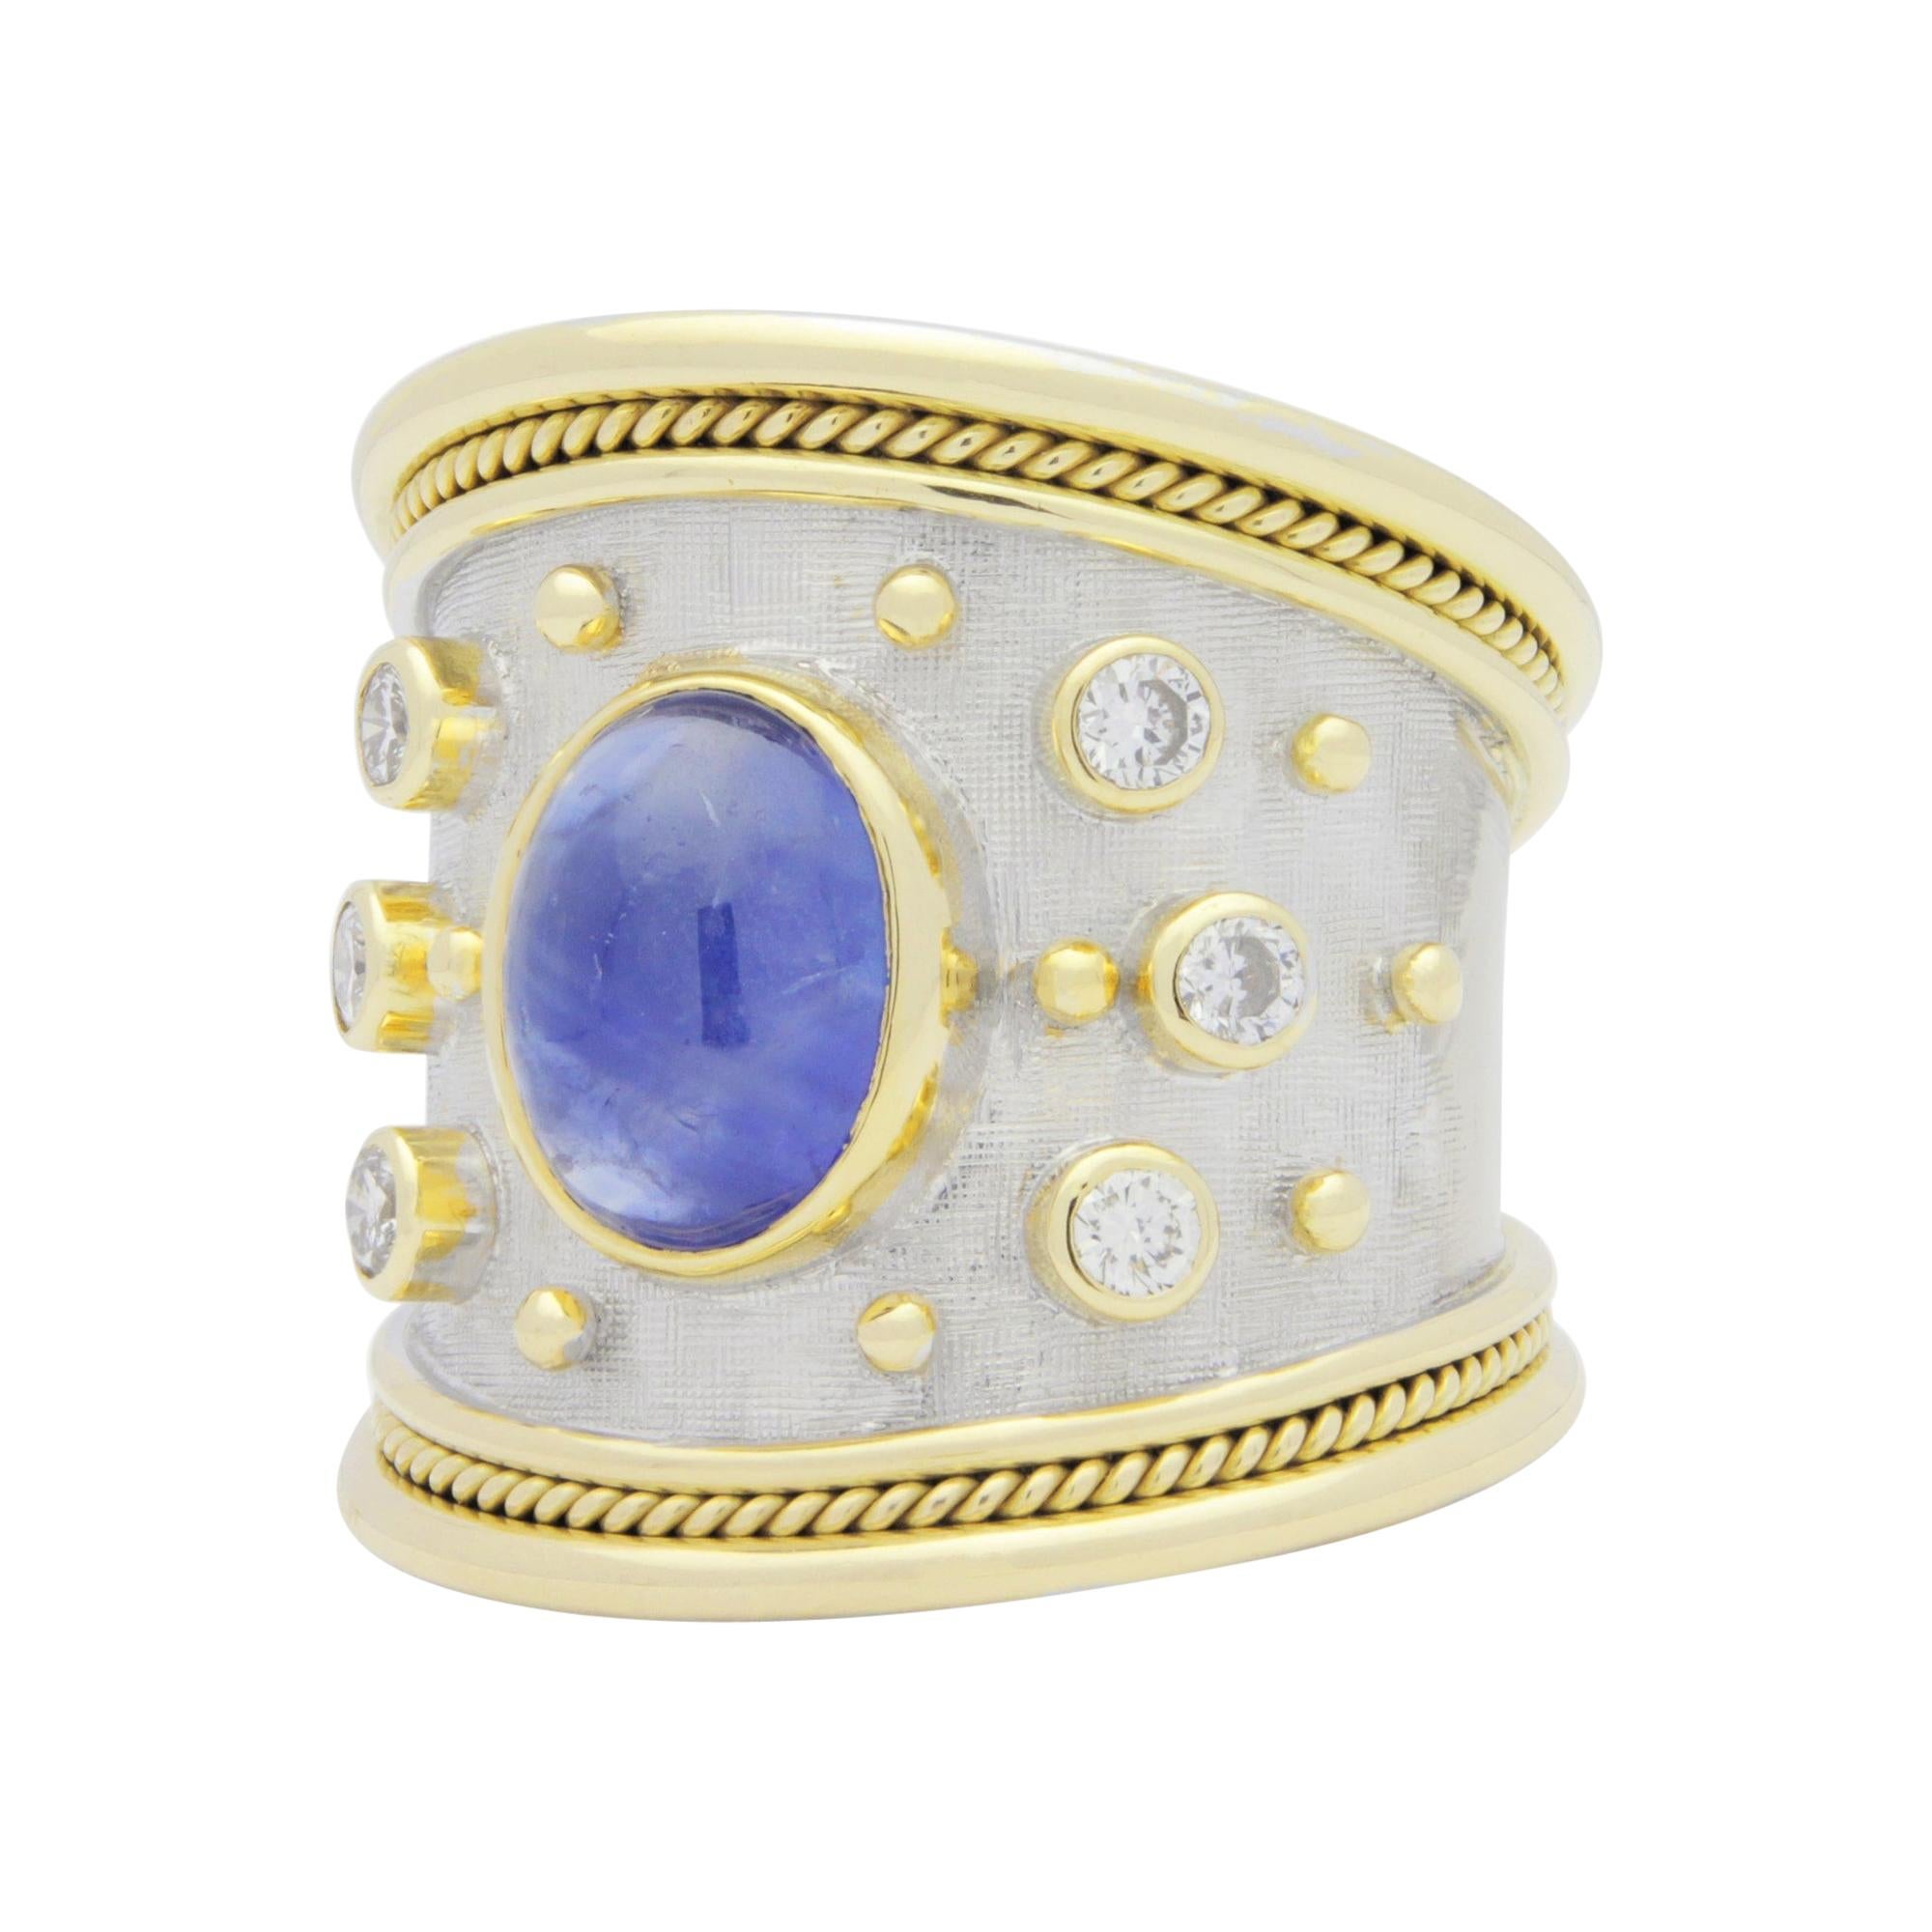 18 Karat Gold, Elizabeth Gage 'Templar' Ring with Sapphire and Diamonds